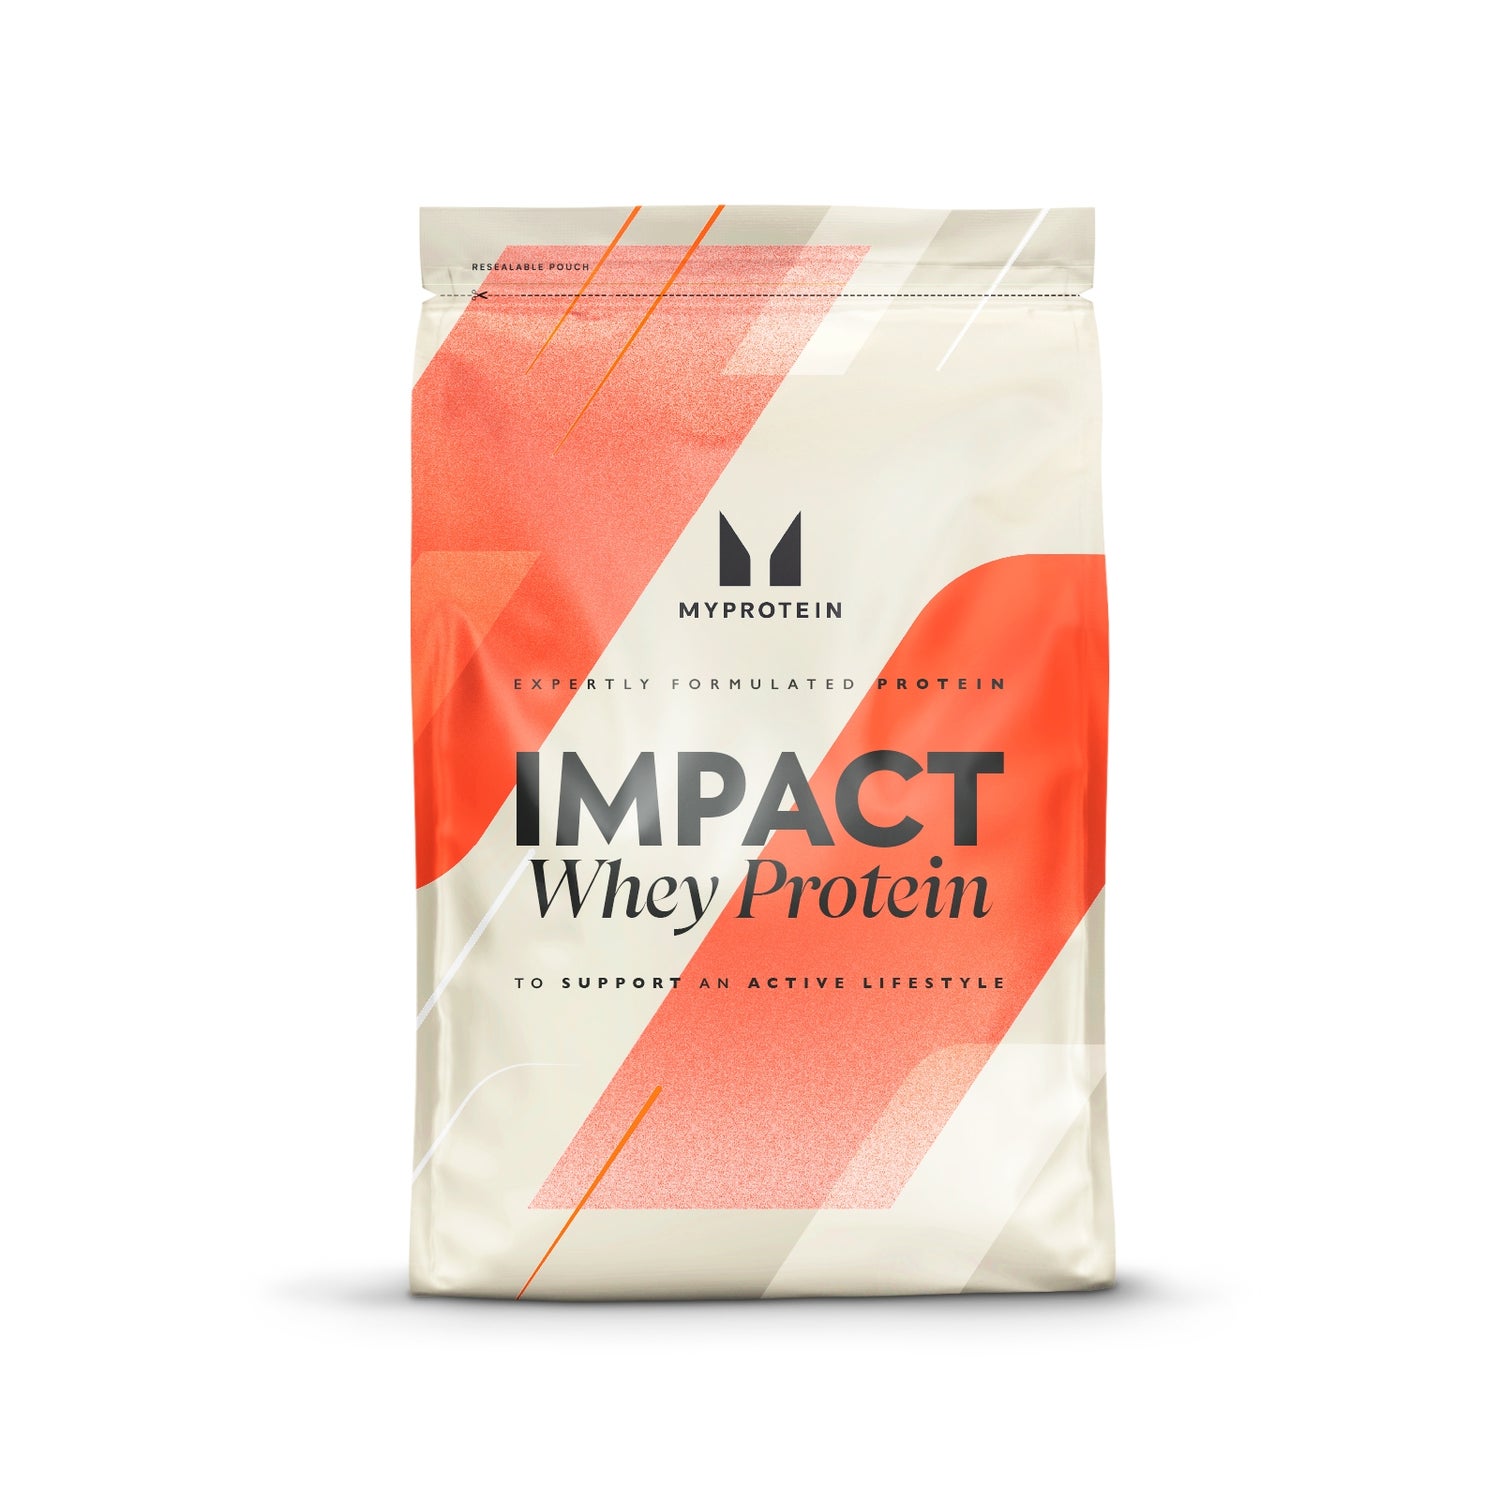 Impact Whey Protein - 0.55lb - Vanilla Ice Cream